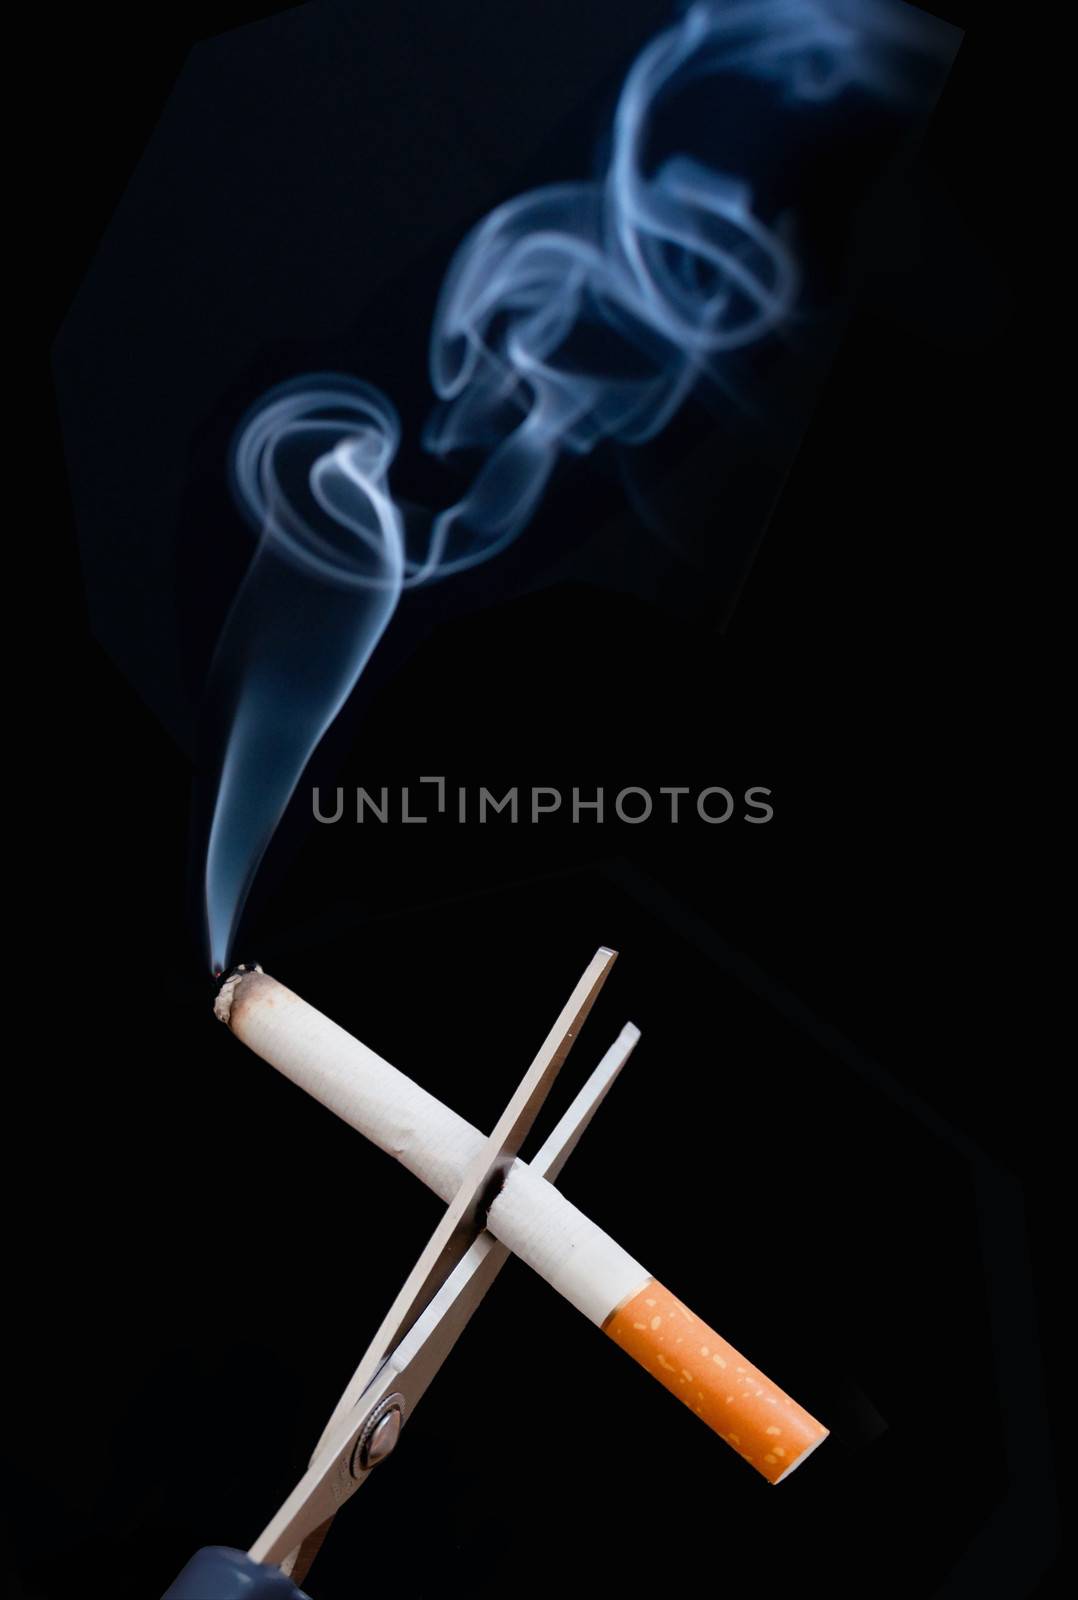 Quit smoking  by unikpix